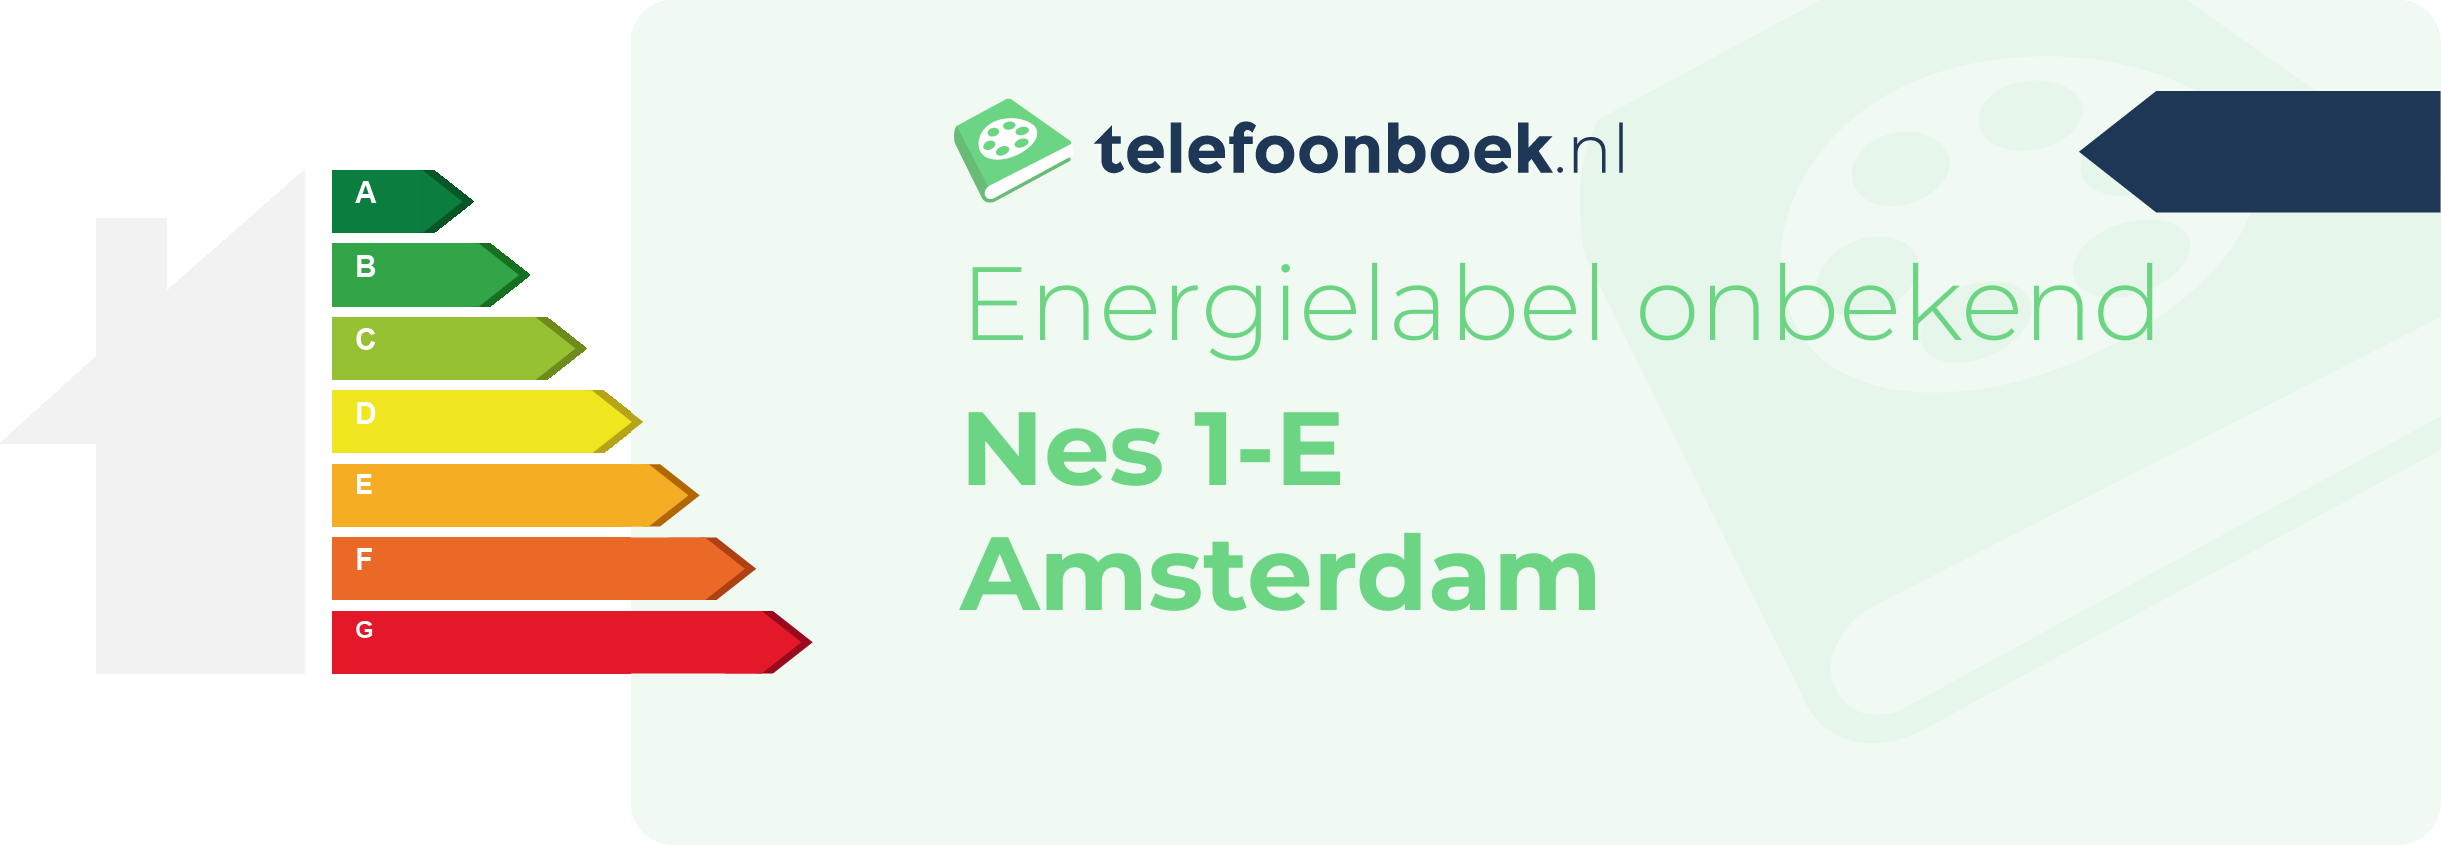 Energielabel Nes 1-E Amsterdam